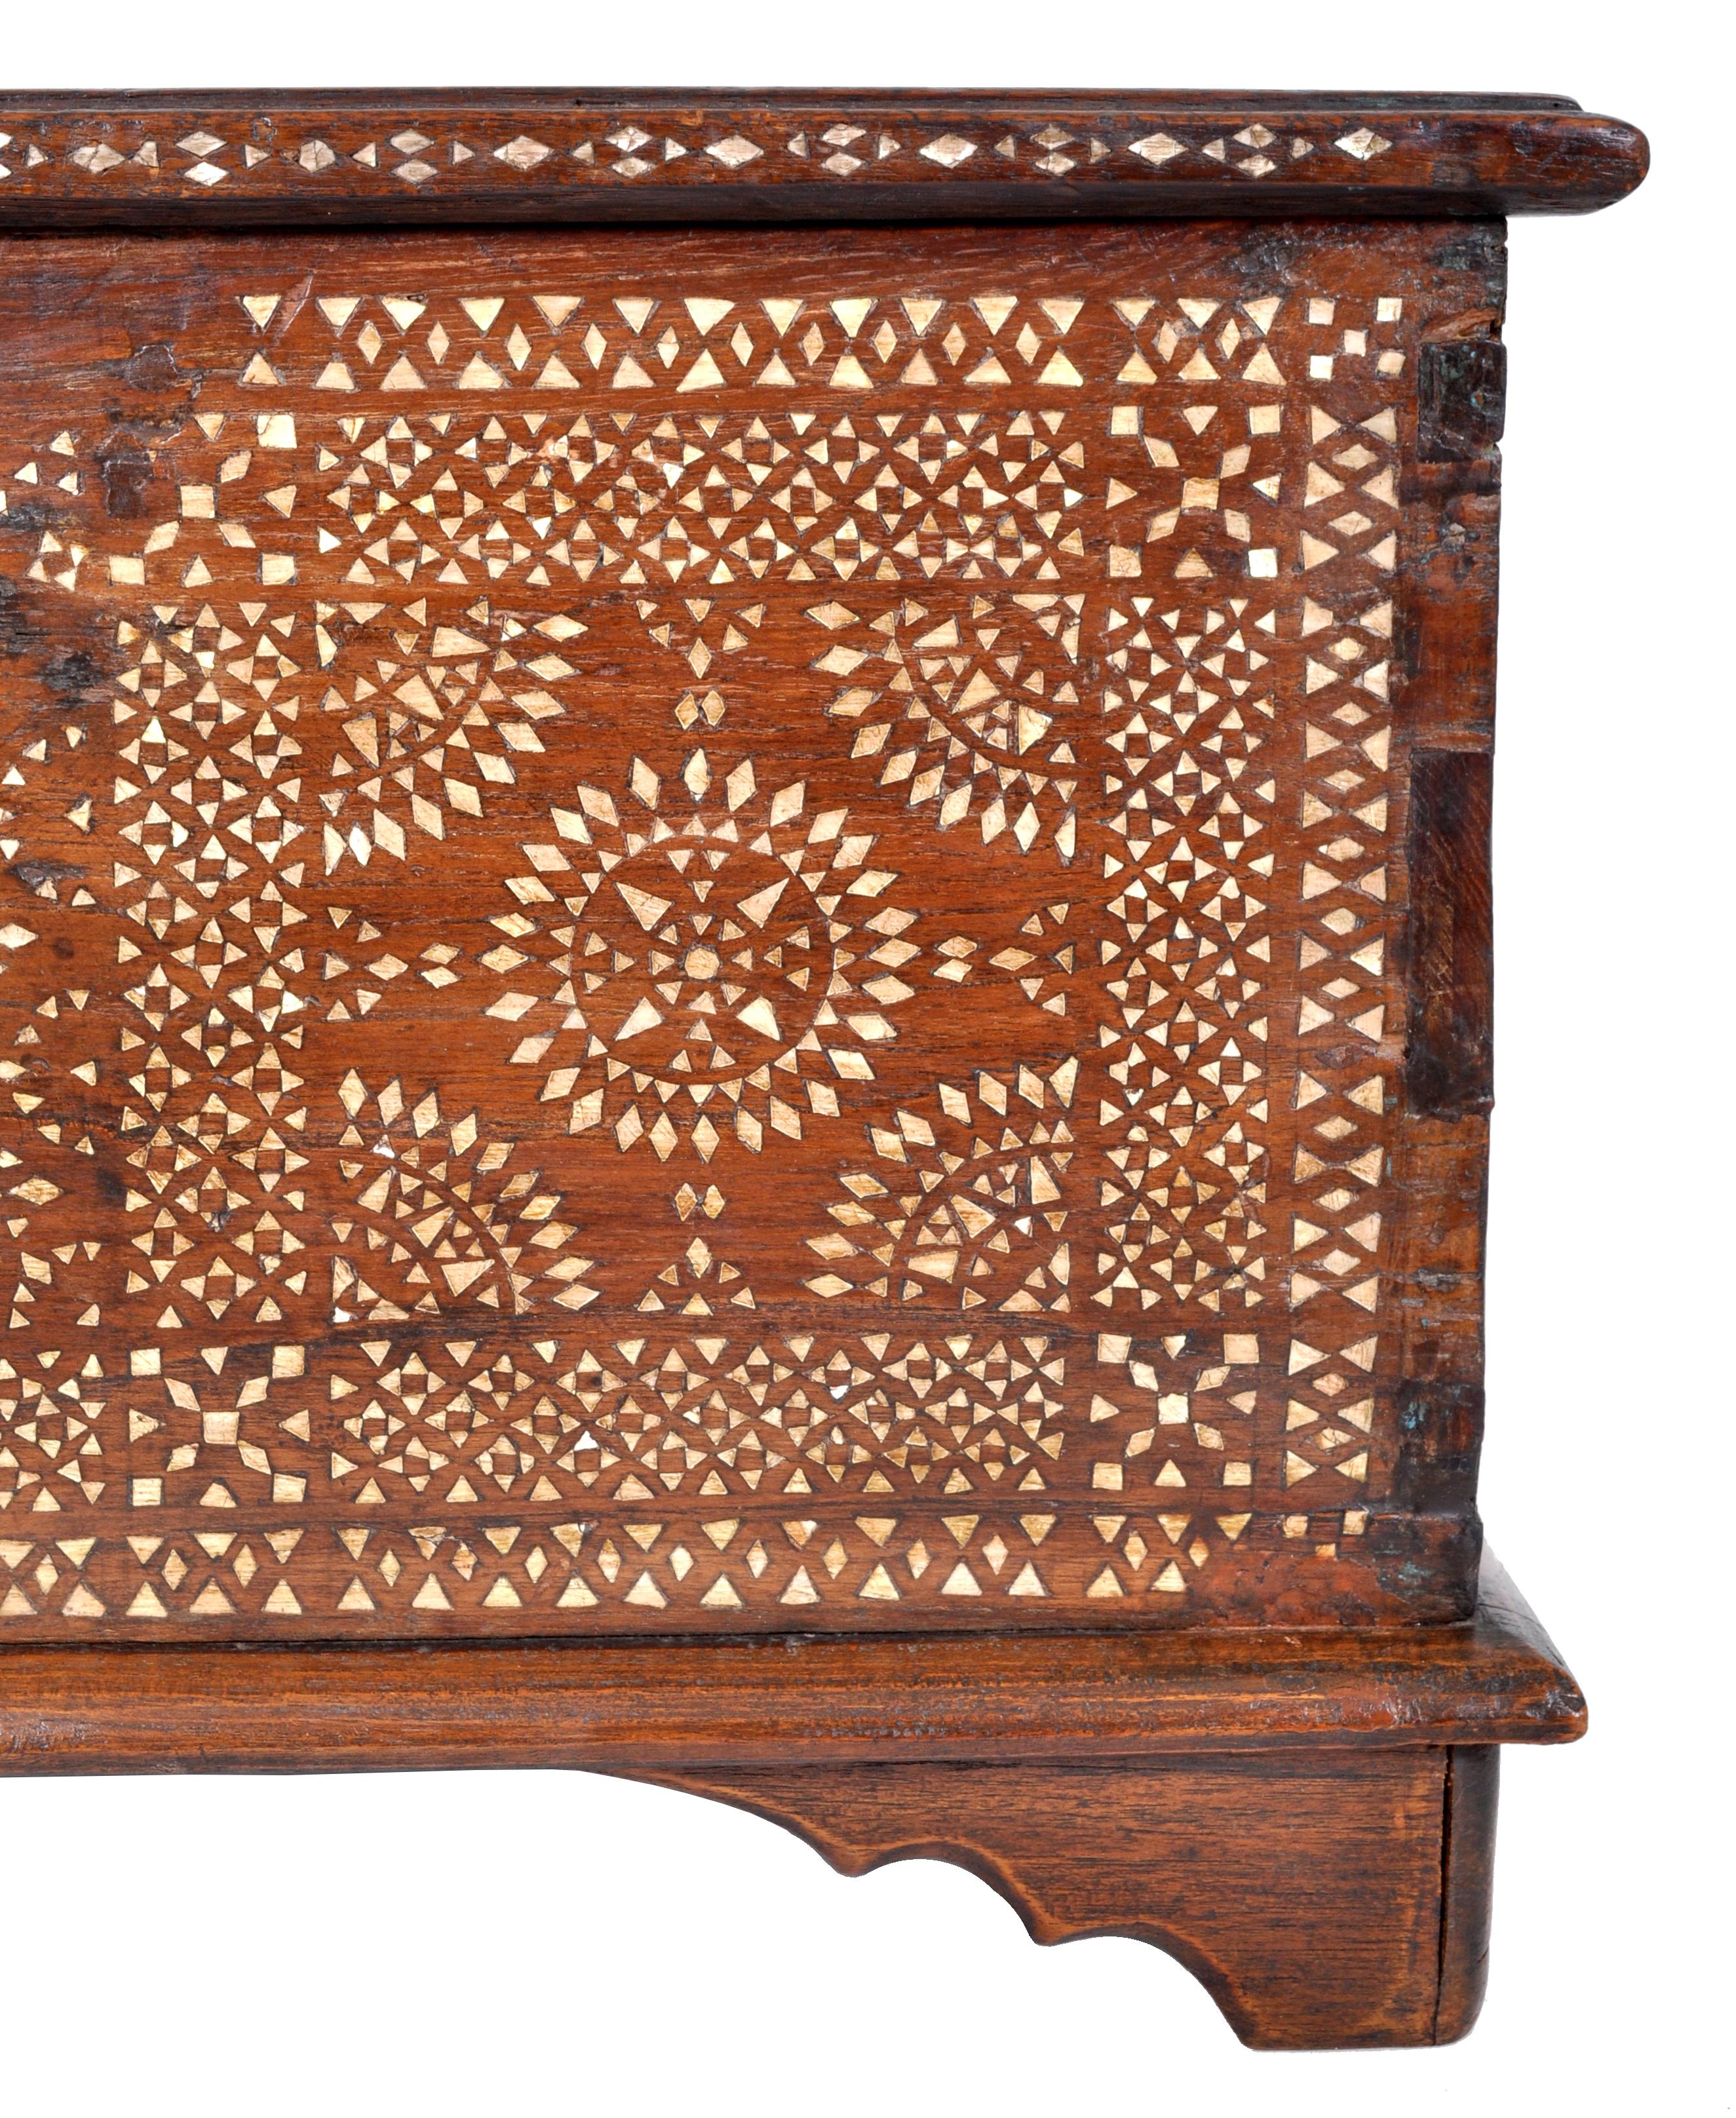 Antique Moorish Moroccan Islamic Inlaid Koran Quran Casket Box Coffer Trunk 1900 2